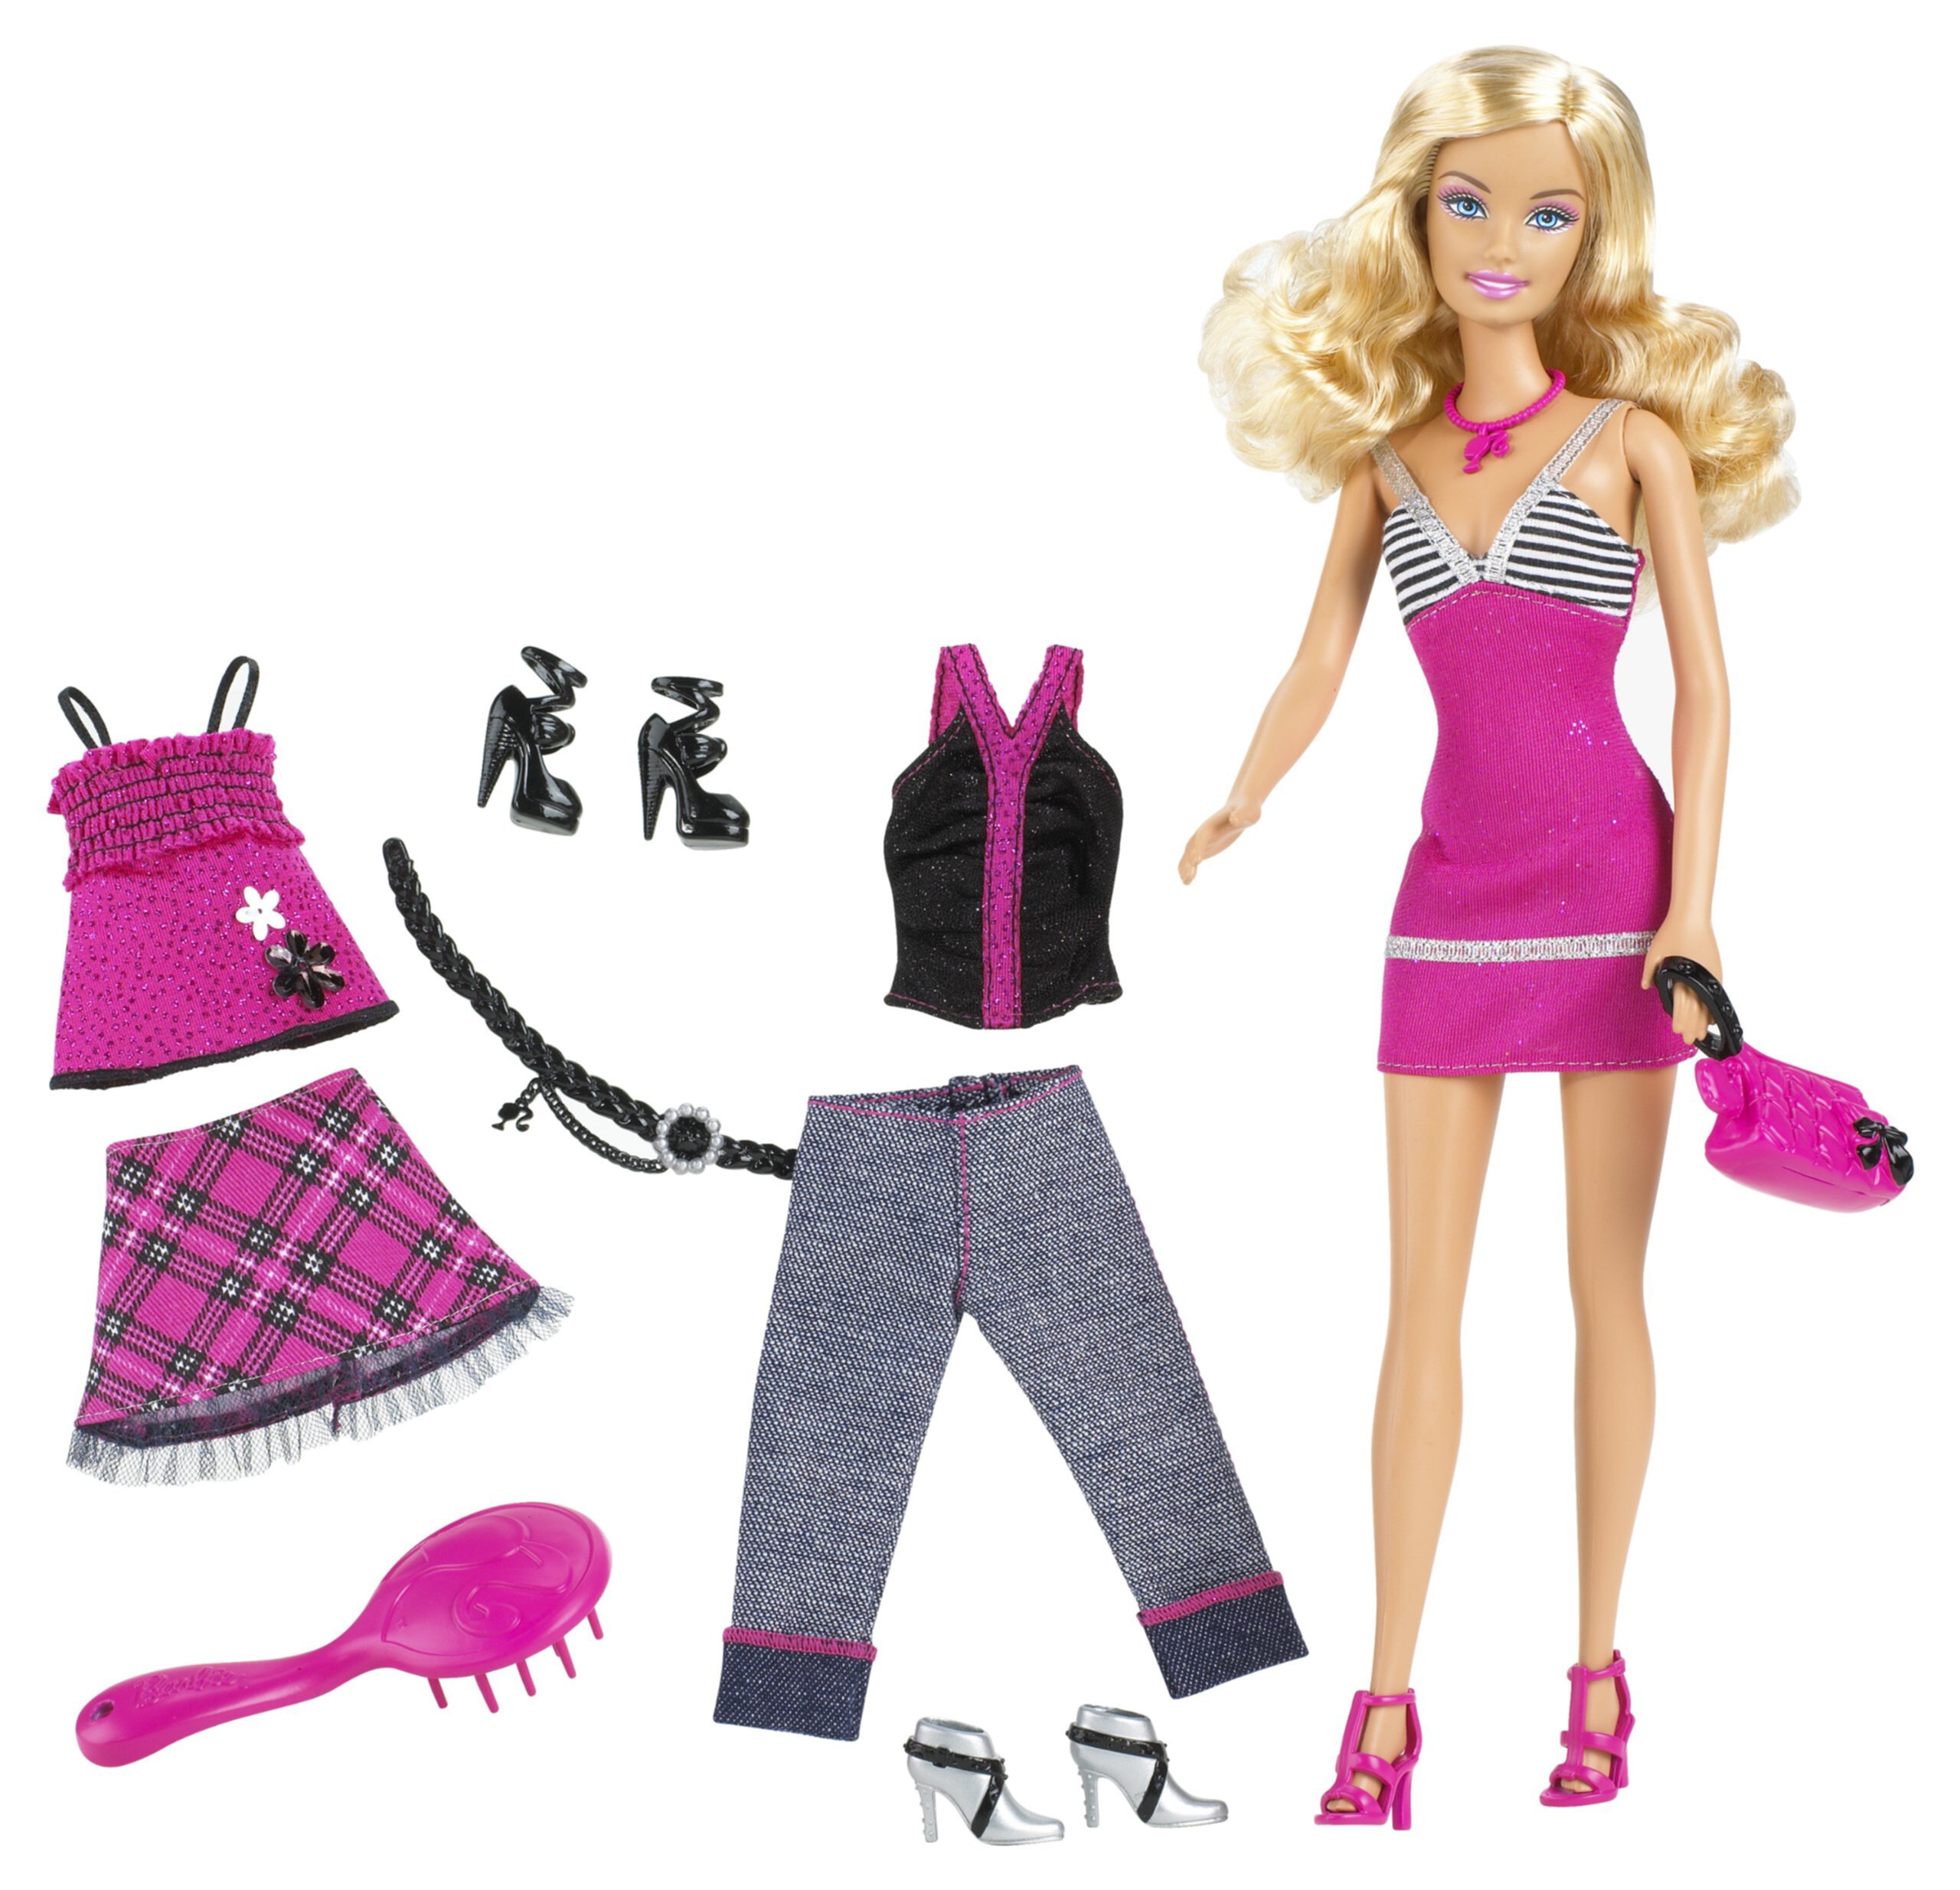 Barbie (Mattel) Barbie кукла Барби 